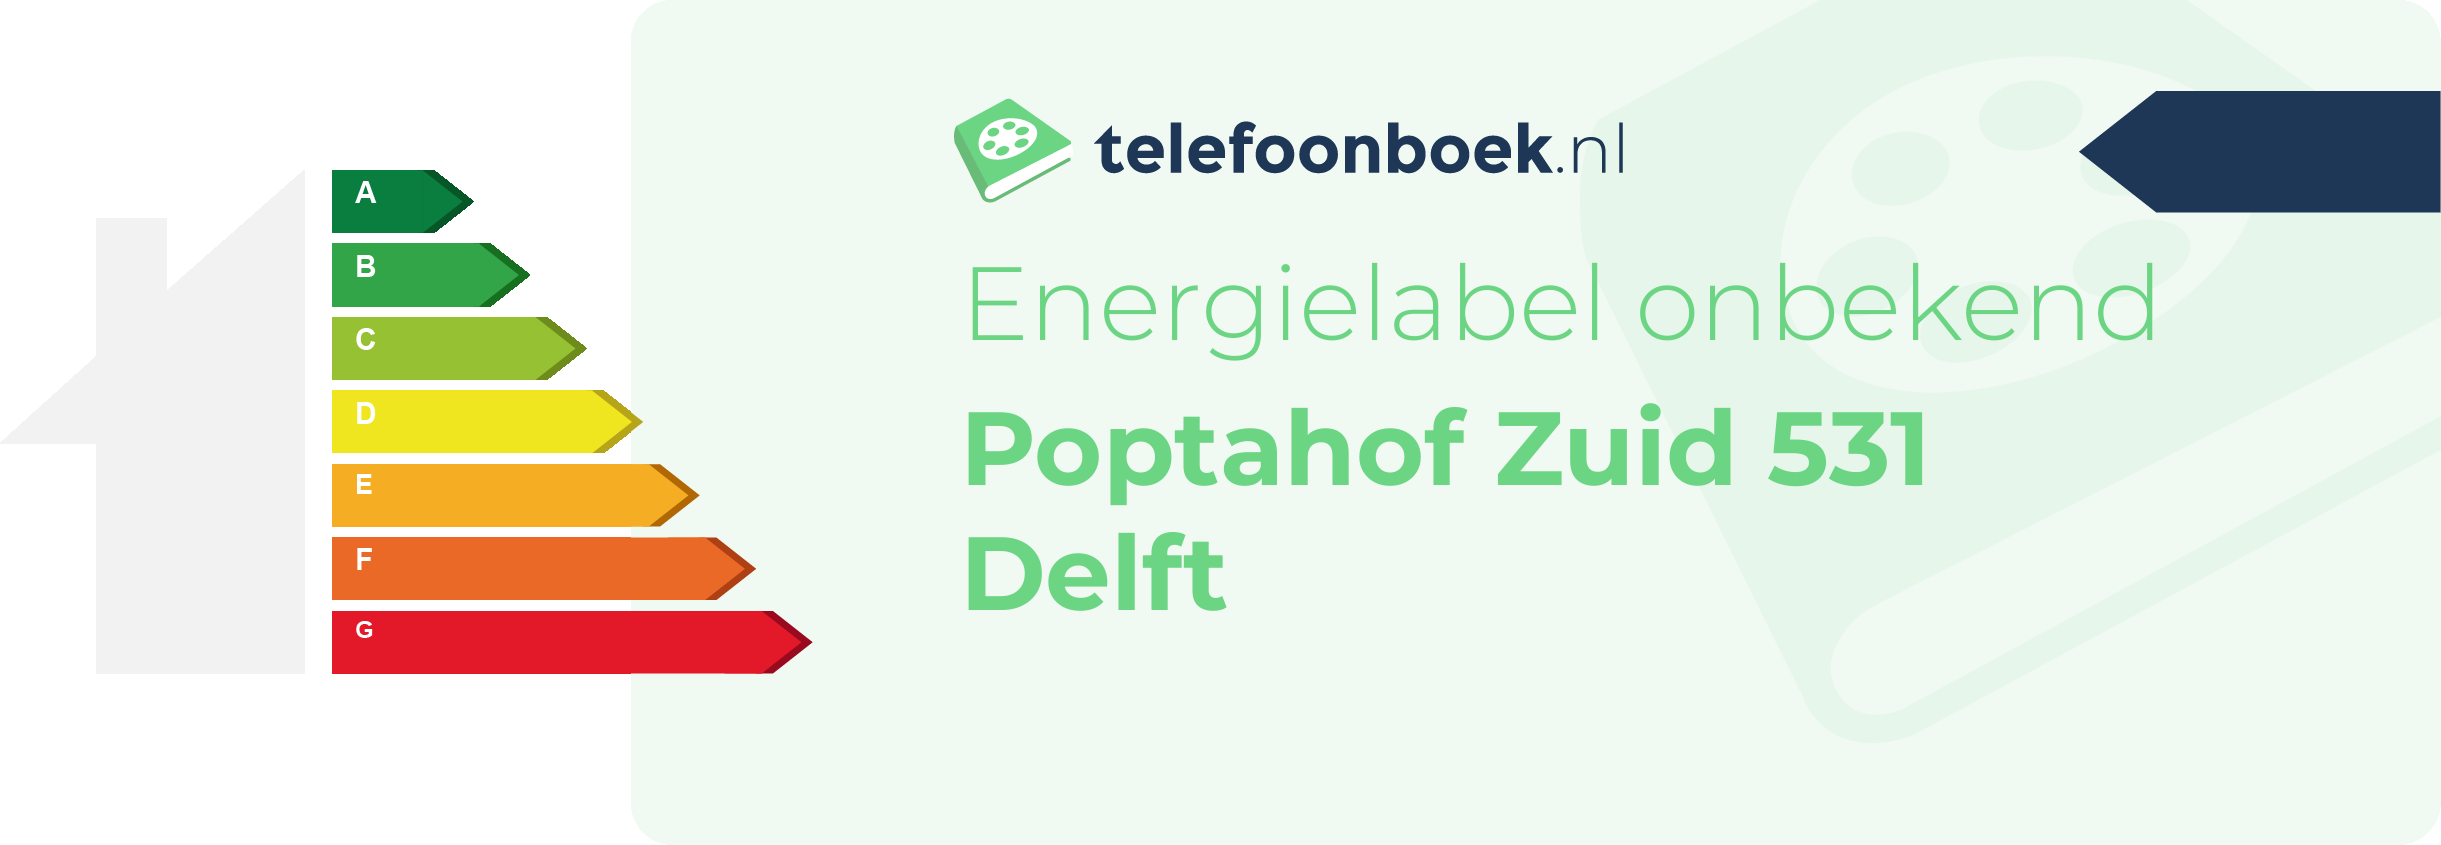 Energielabel Poptahof Zuid 531 Delft